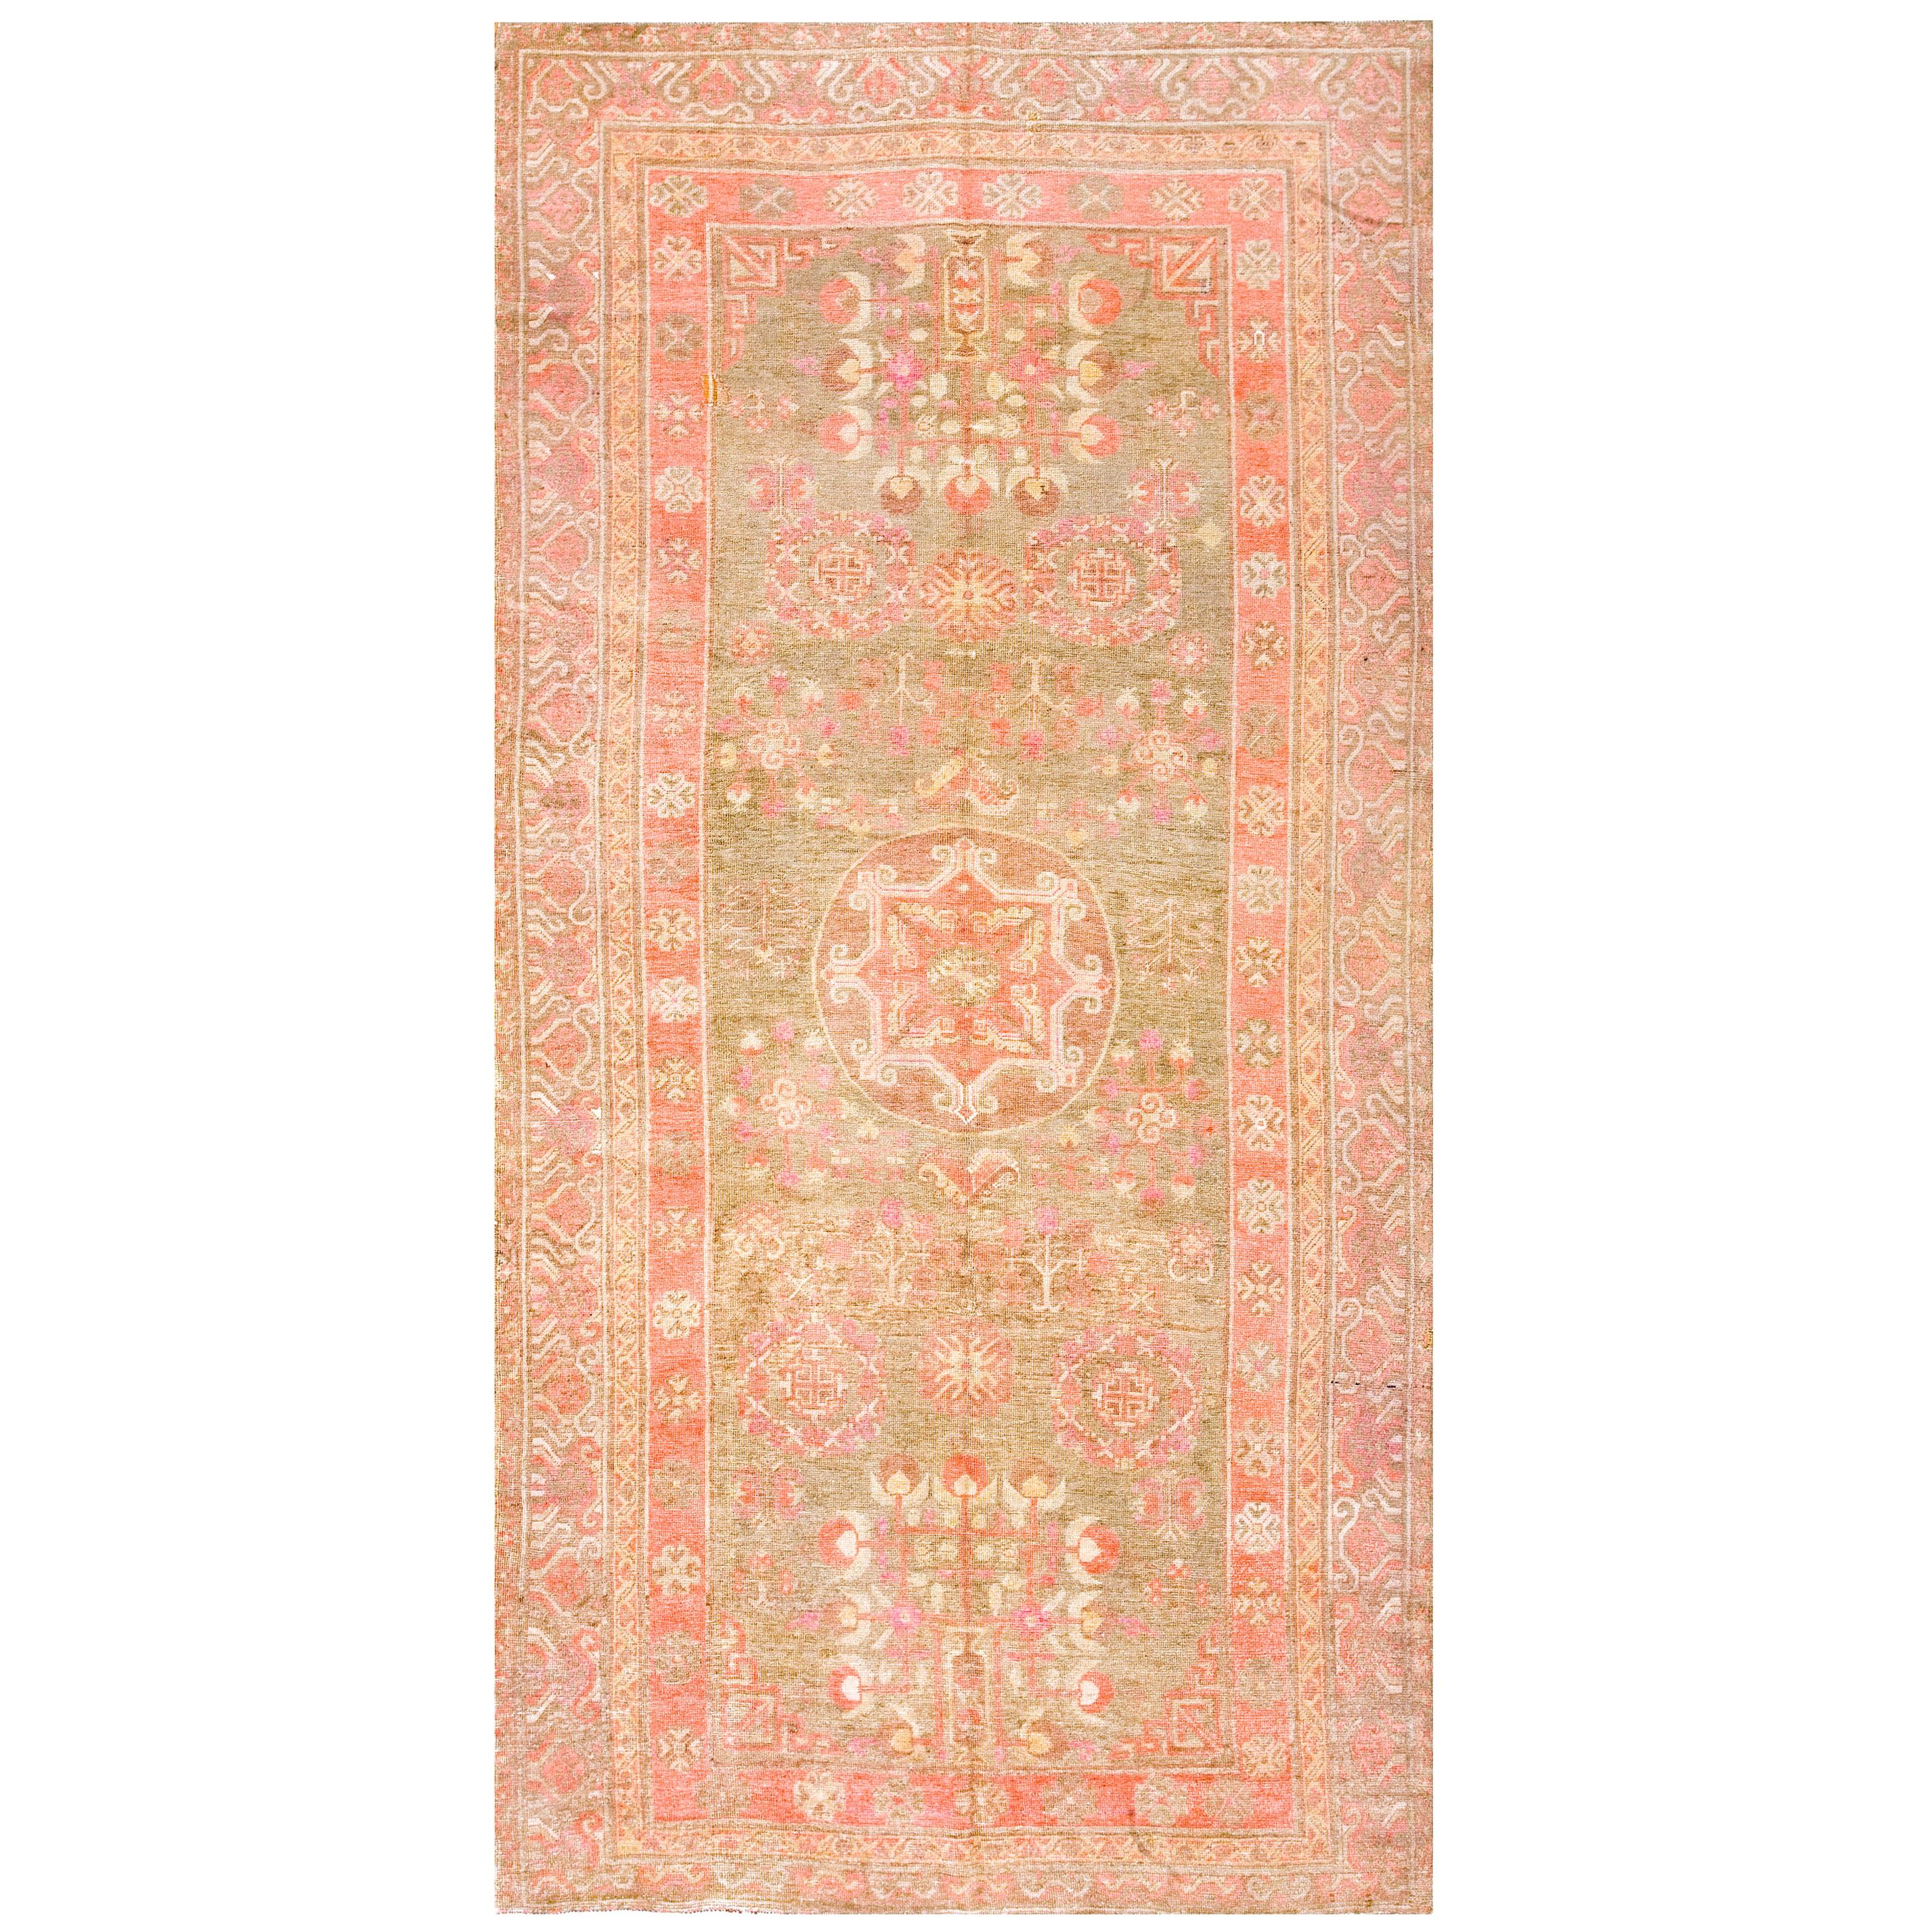 Early 20th Century Central Asian Khotan Carpet ( 5'6" x 11'2" - 168 x 340 )